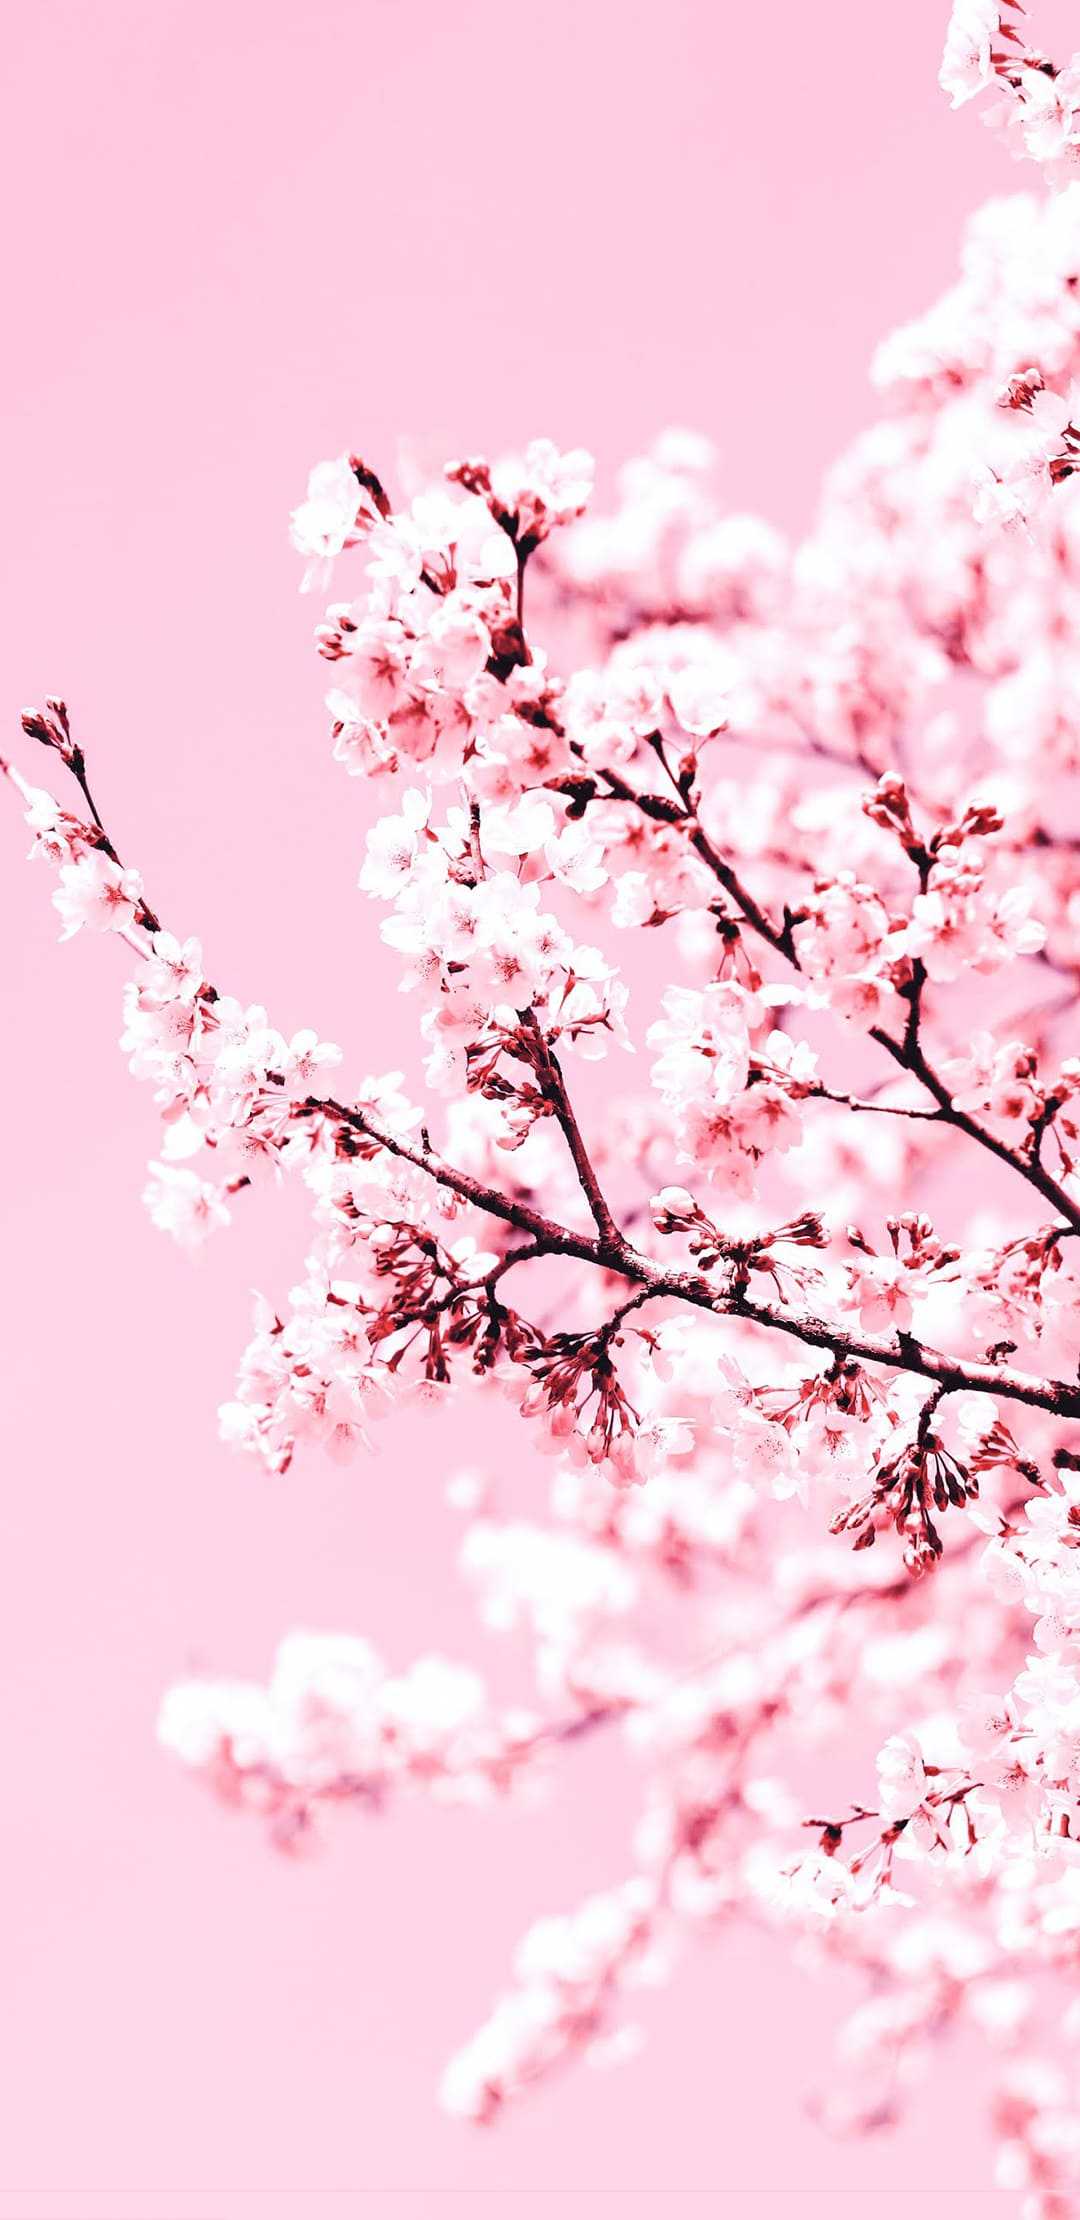 Sakura.Scenic wallpaper - Opera add-ons